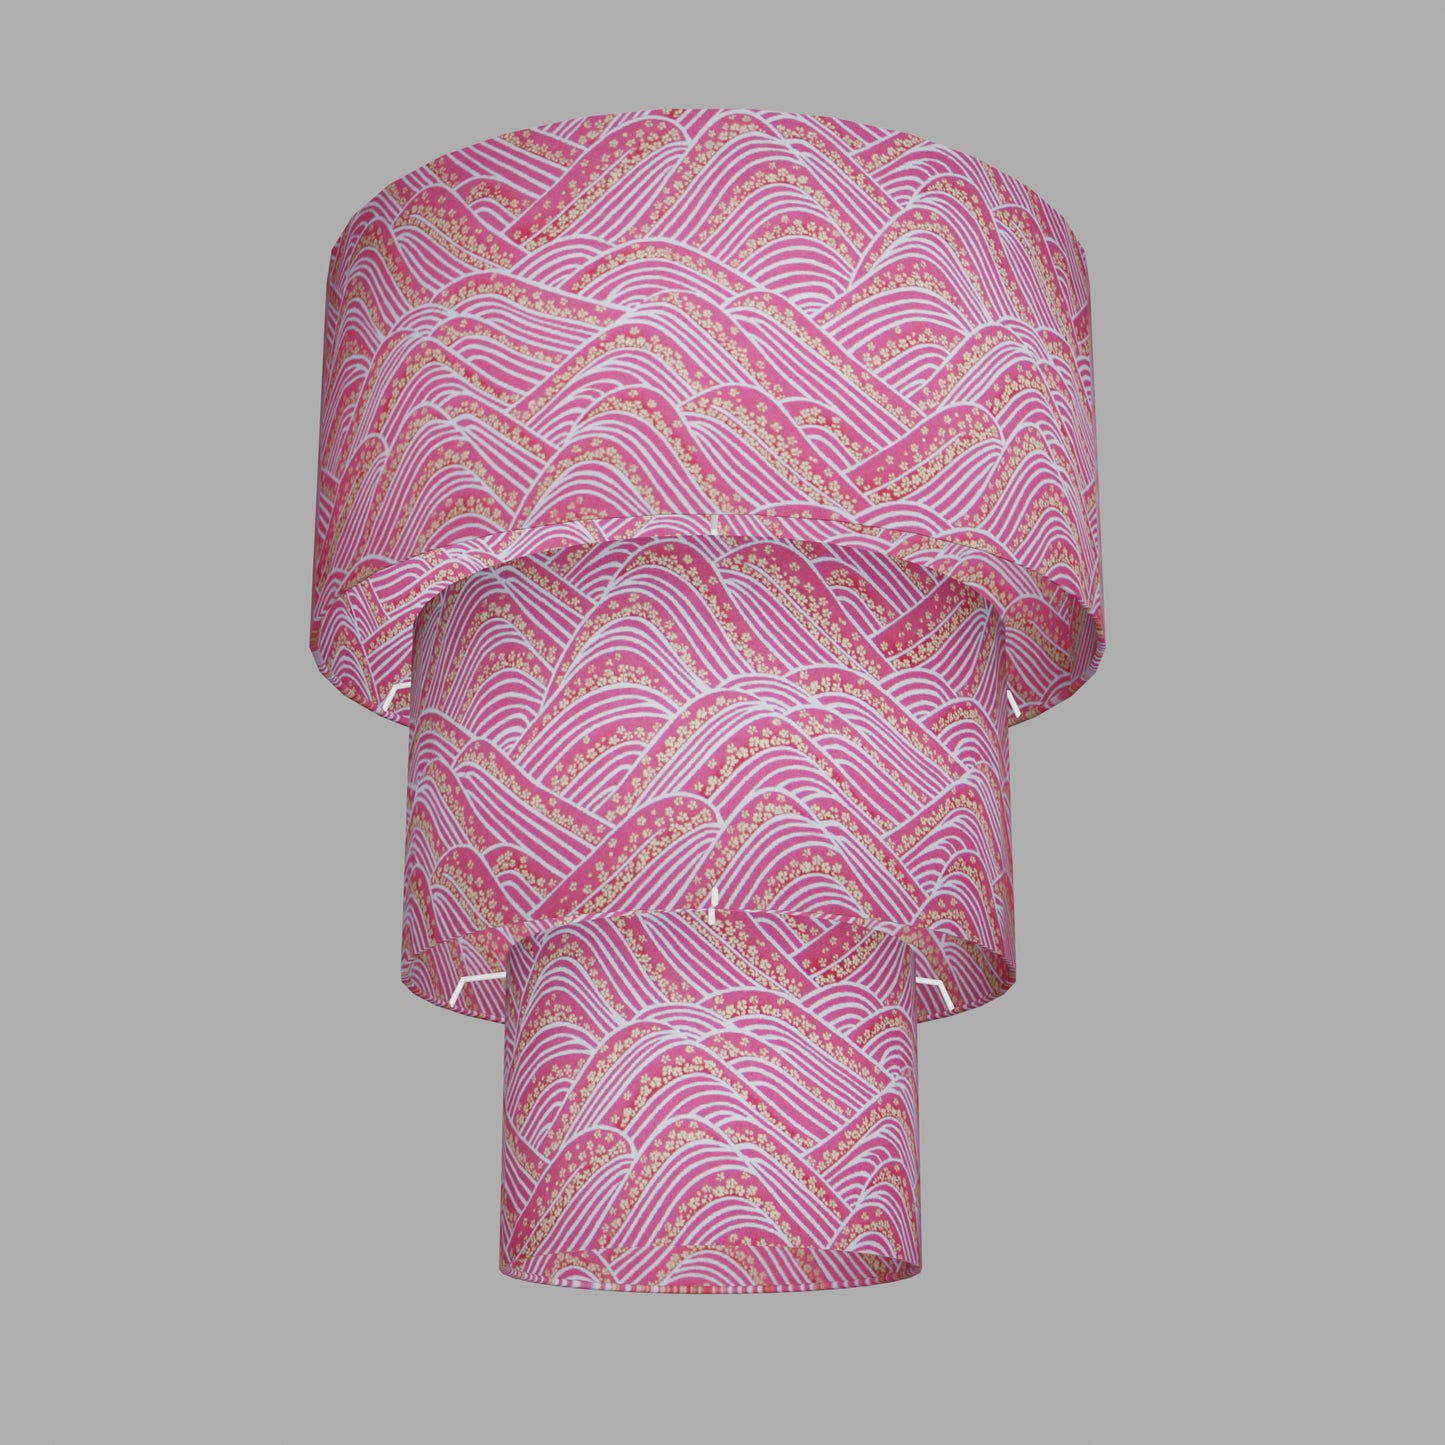 3 Tier Lamp Shade - W04 - Pink Hills with Gold Flowers, 40cm x 20cm, 30cm x 17.5cm & 20cm x 15cm